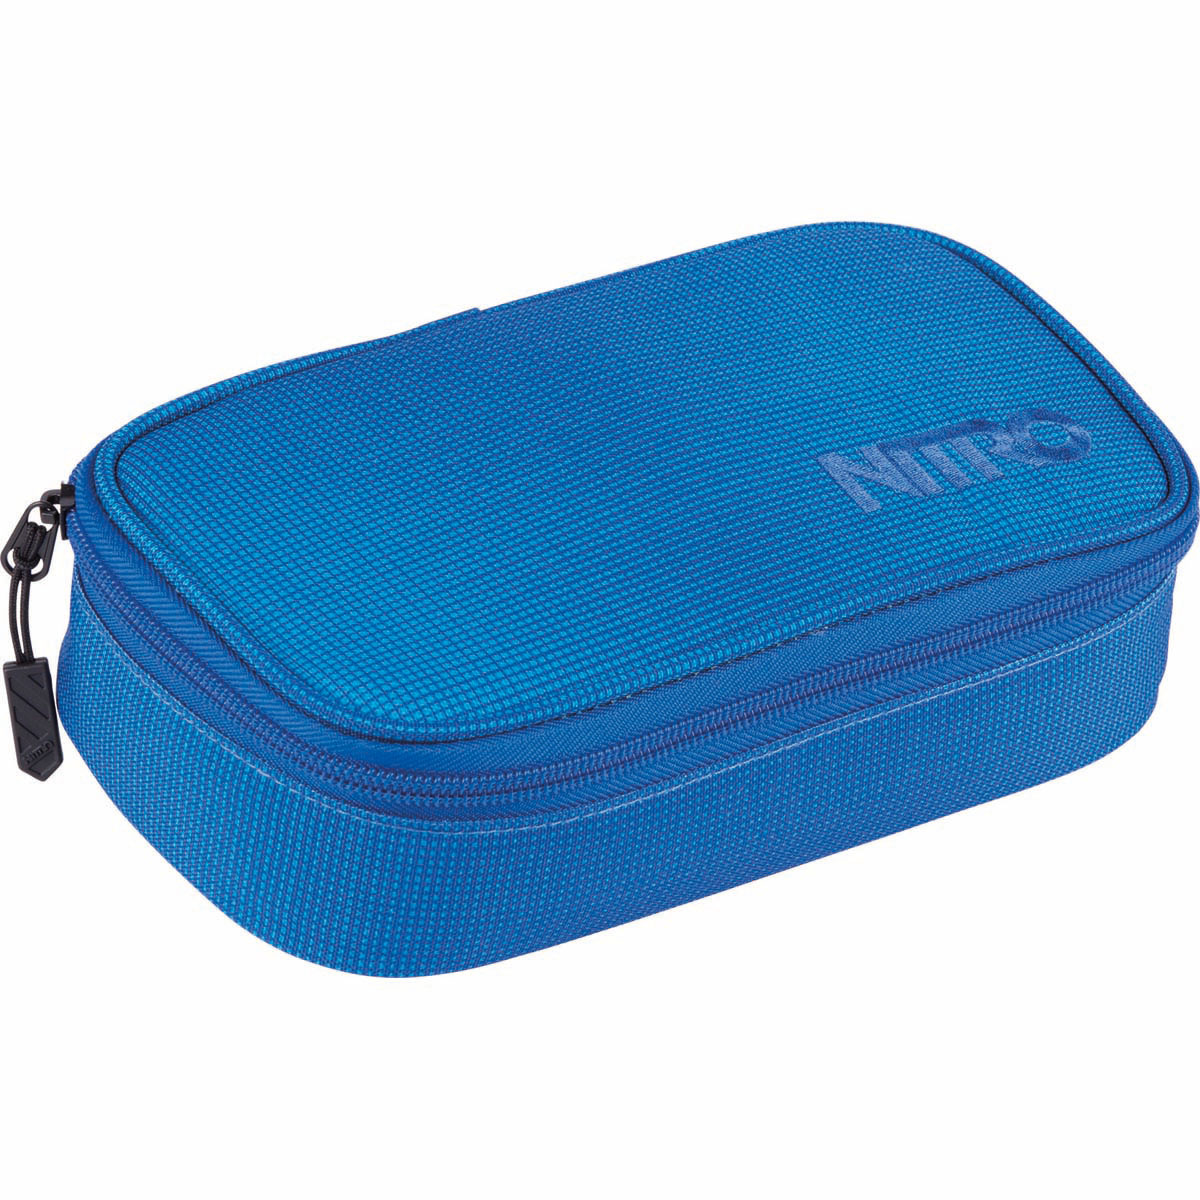 Nitro Pencil Case XL Mäppchen Blur Brilliant Blue | Nitrobags Shop